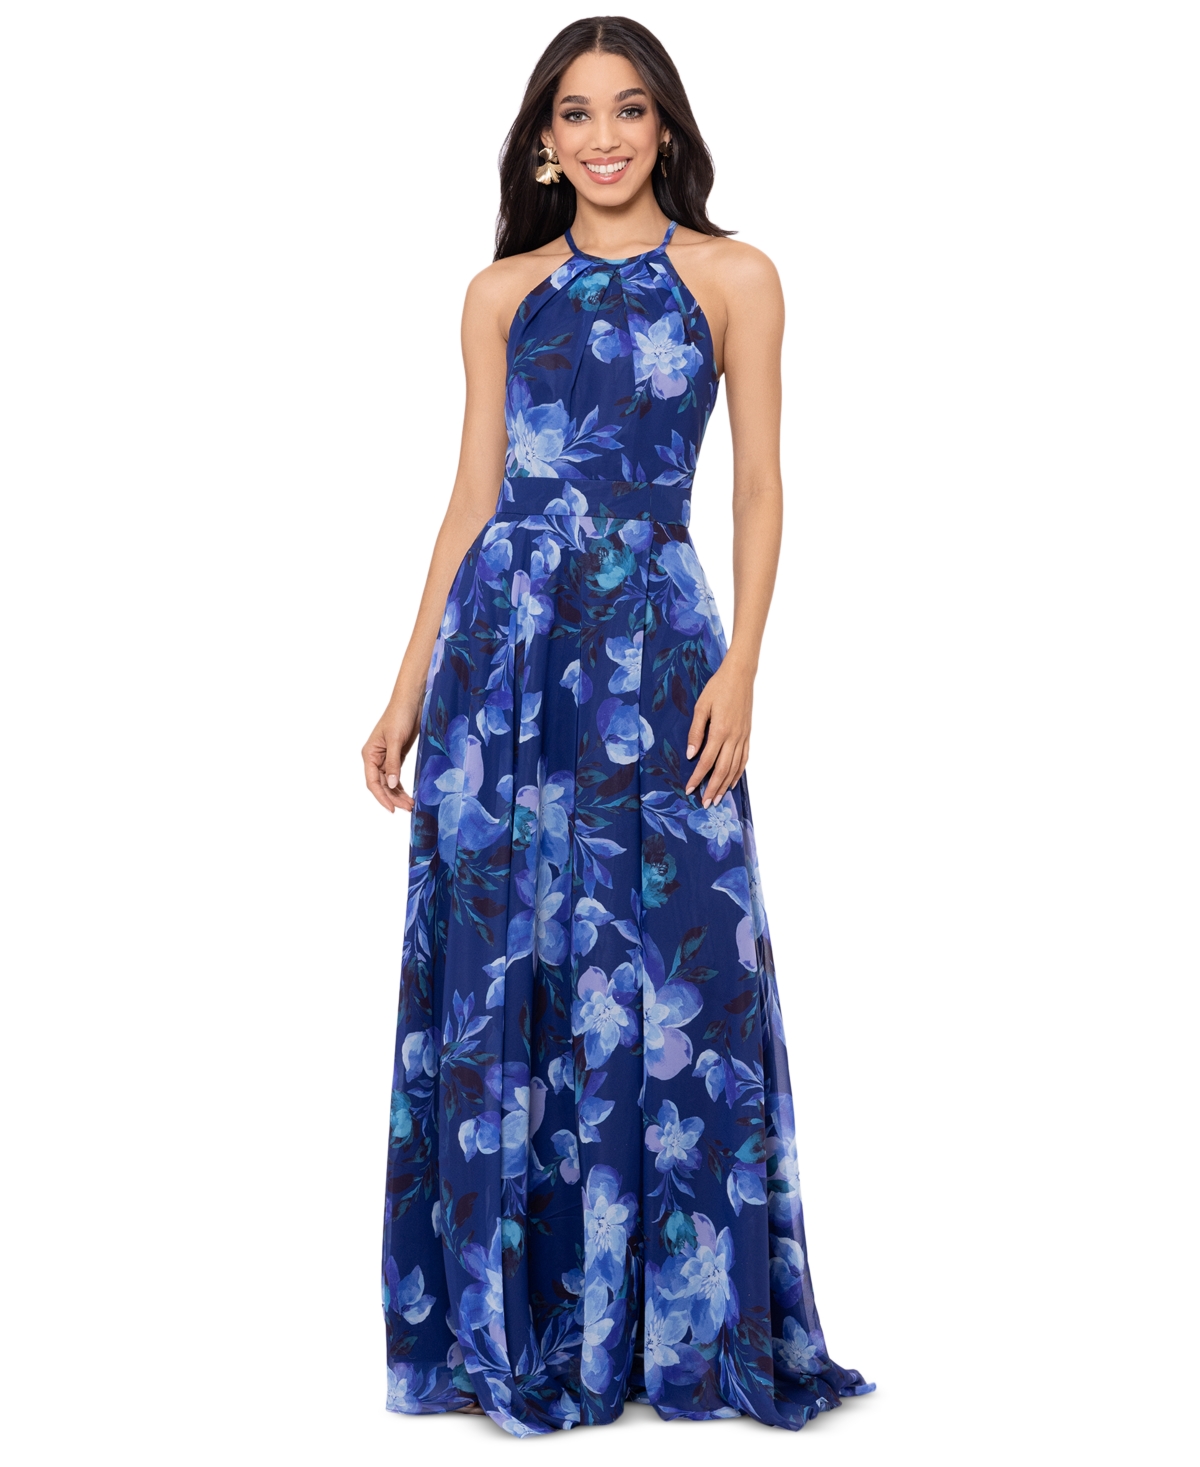 Women's Floral-Print Halter Gown - Blue Multi